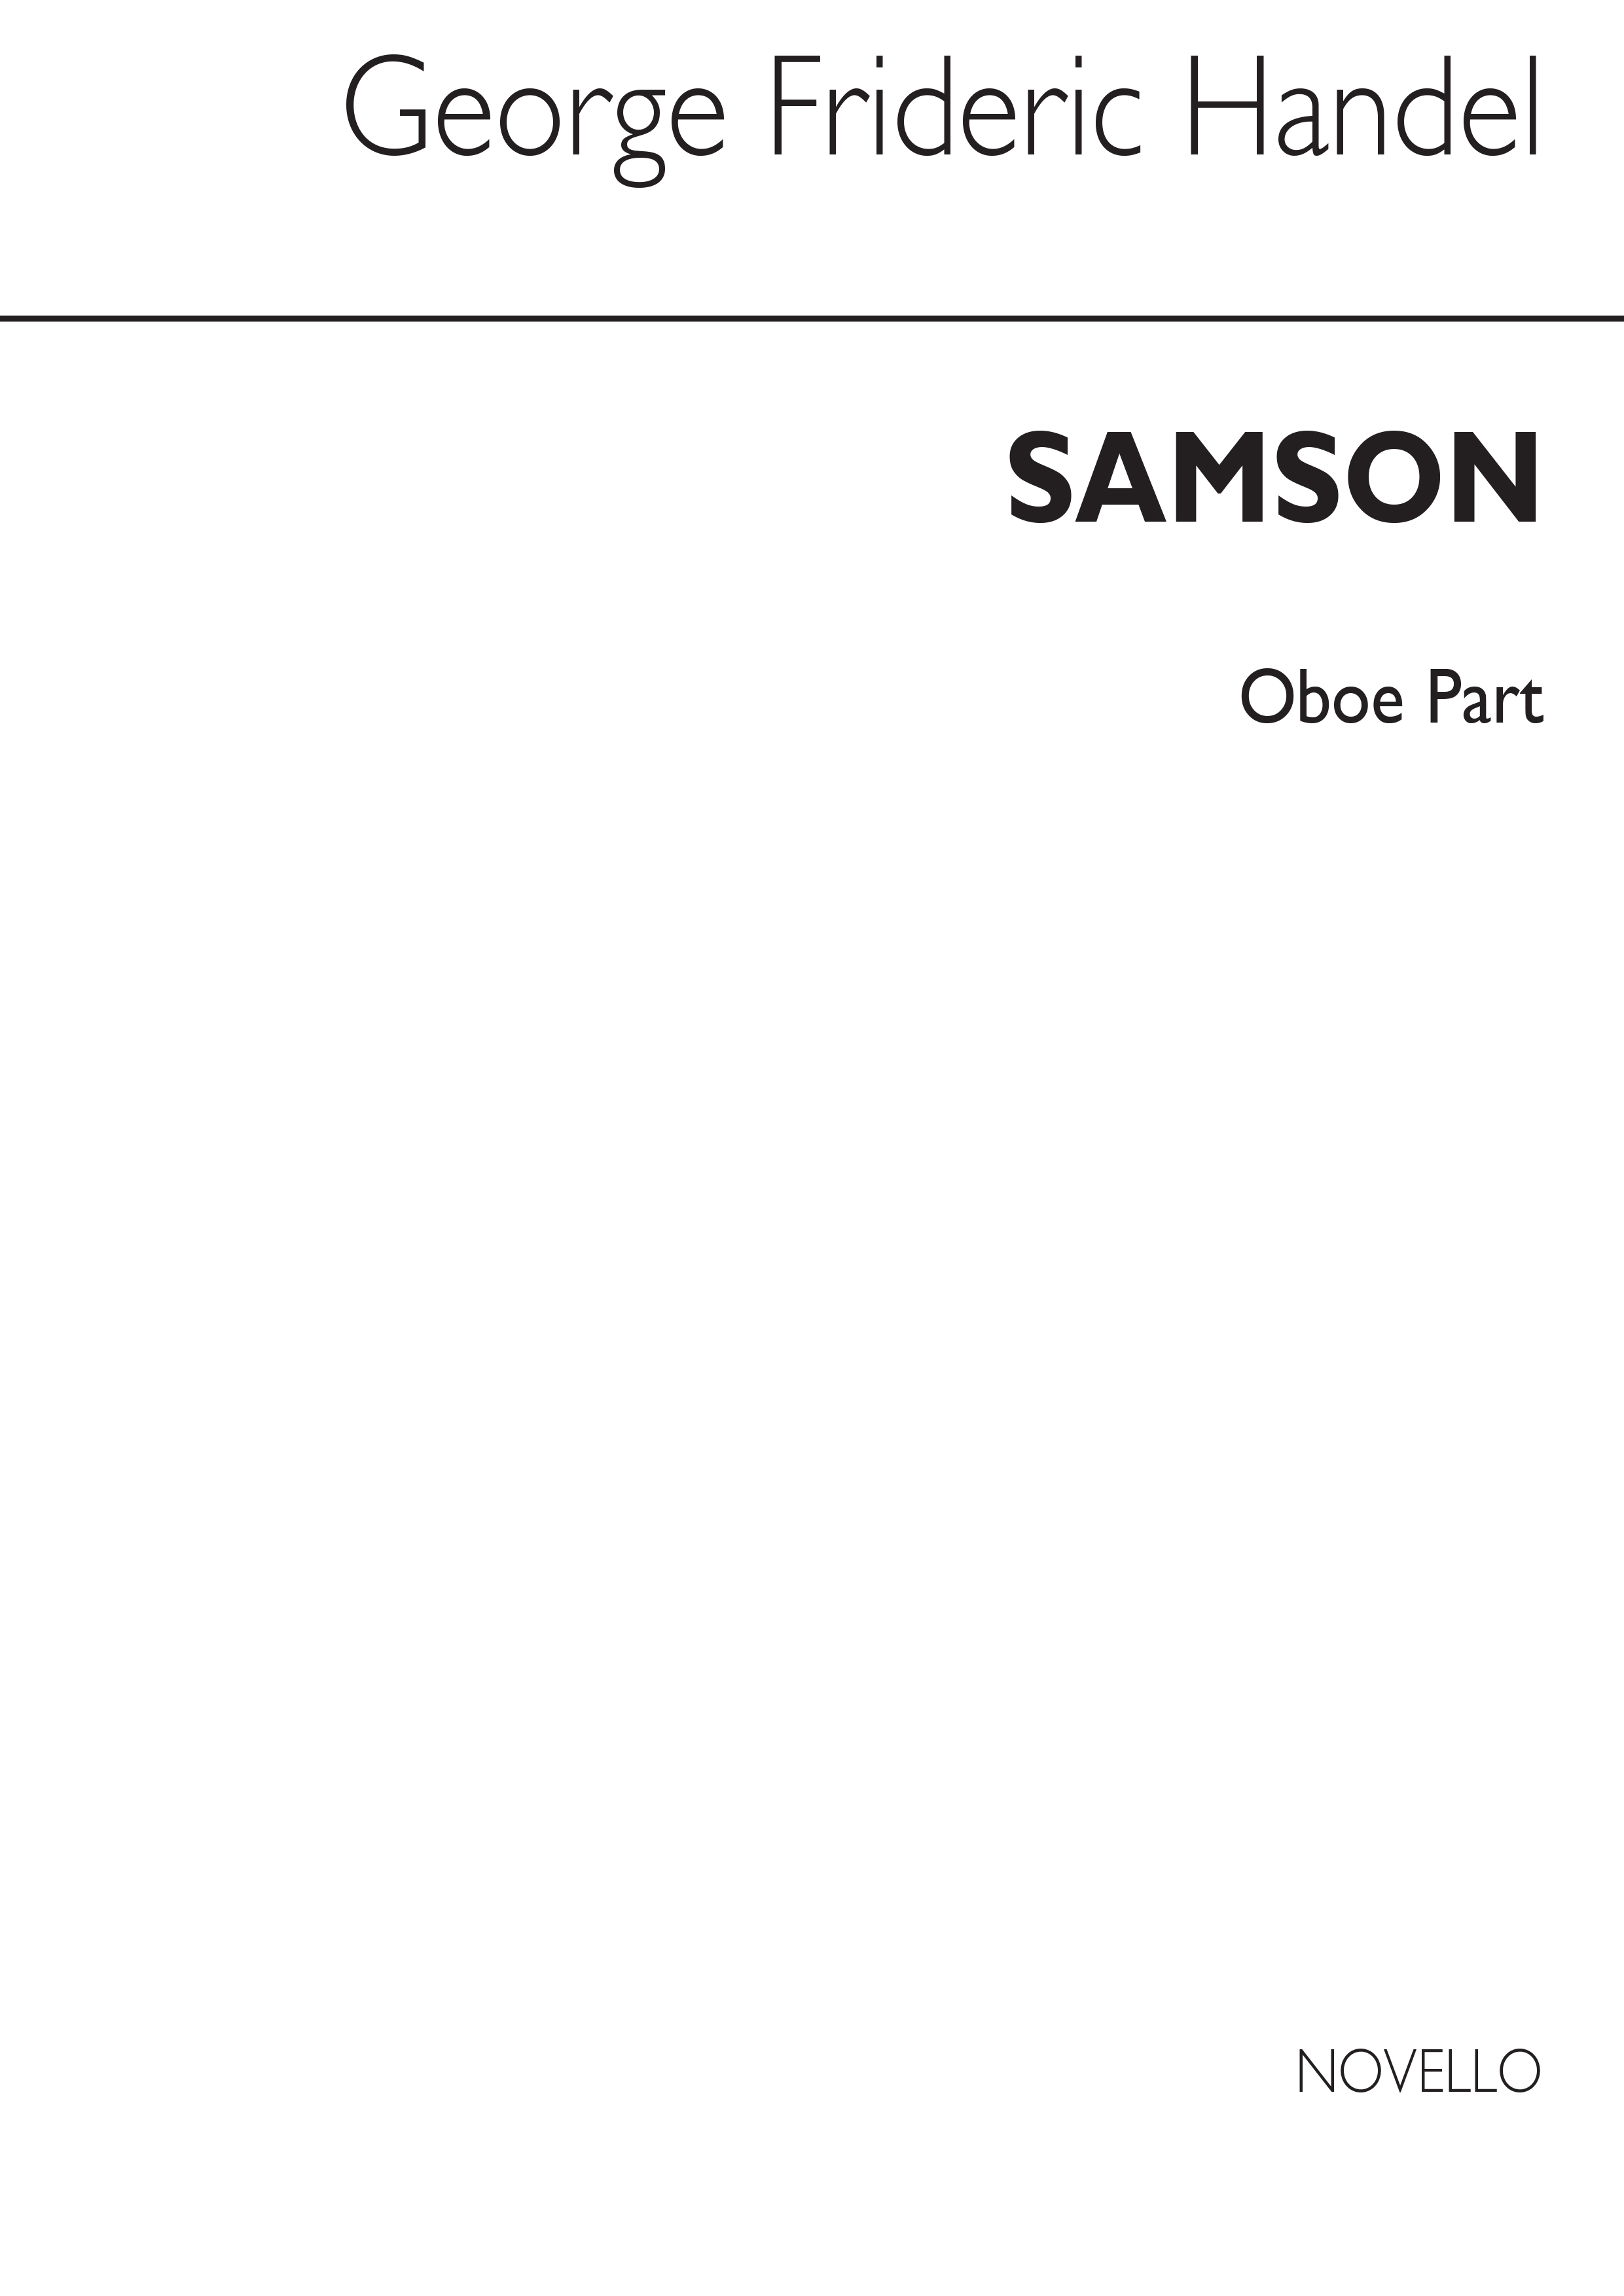 Georg Friedrich Hndel: Samson (Oboe Parts): Opera: Parts